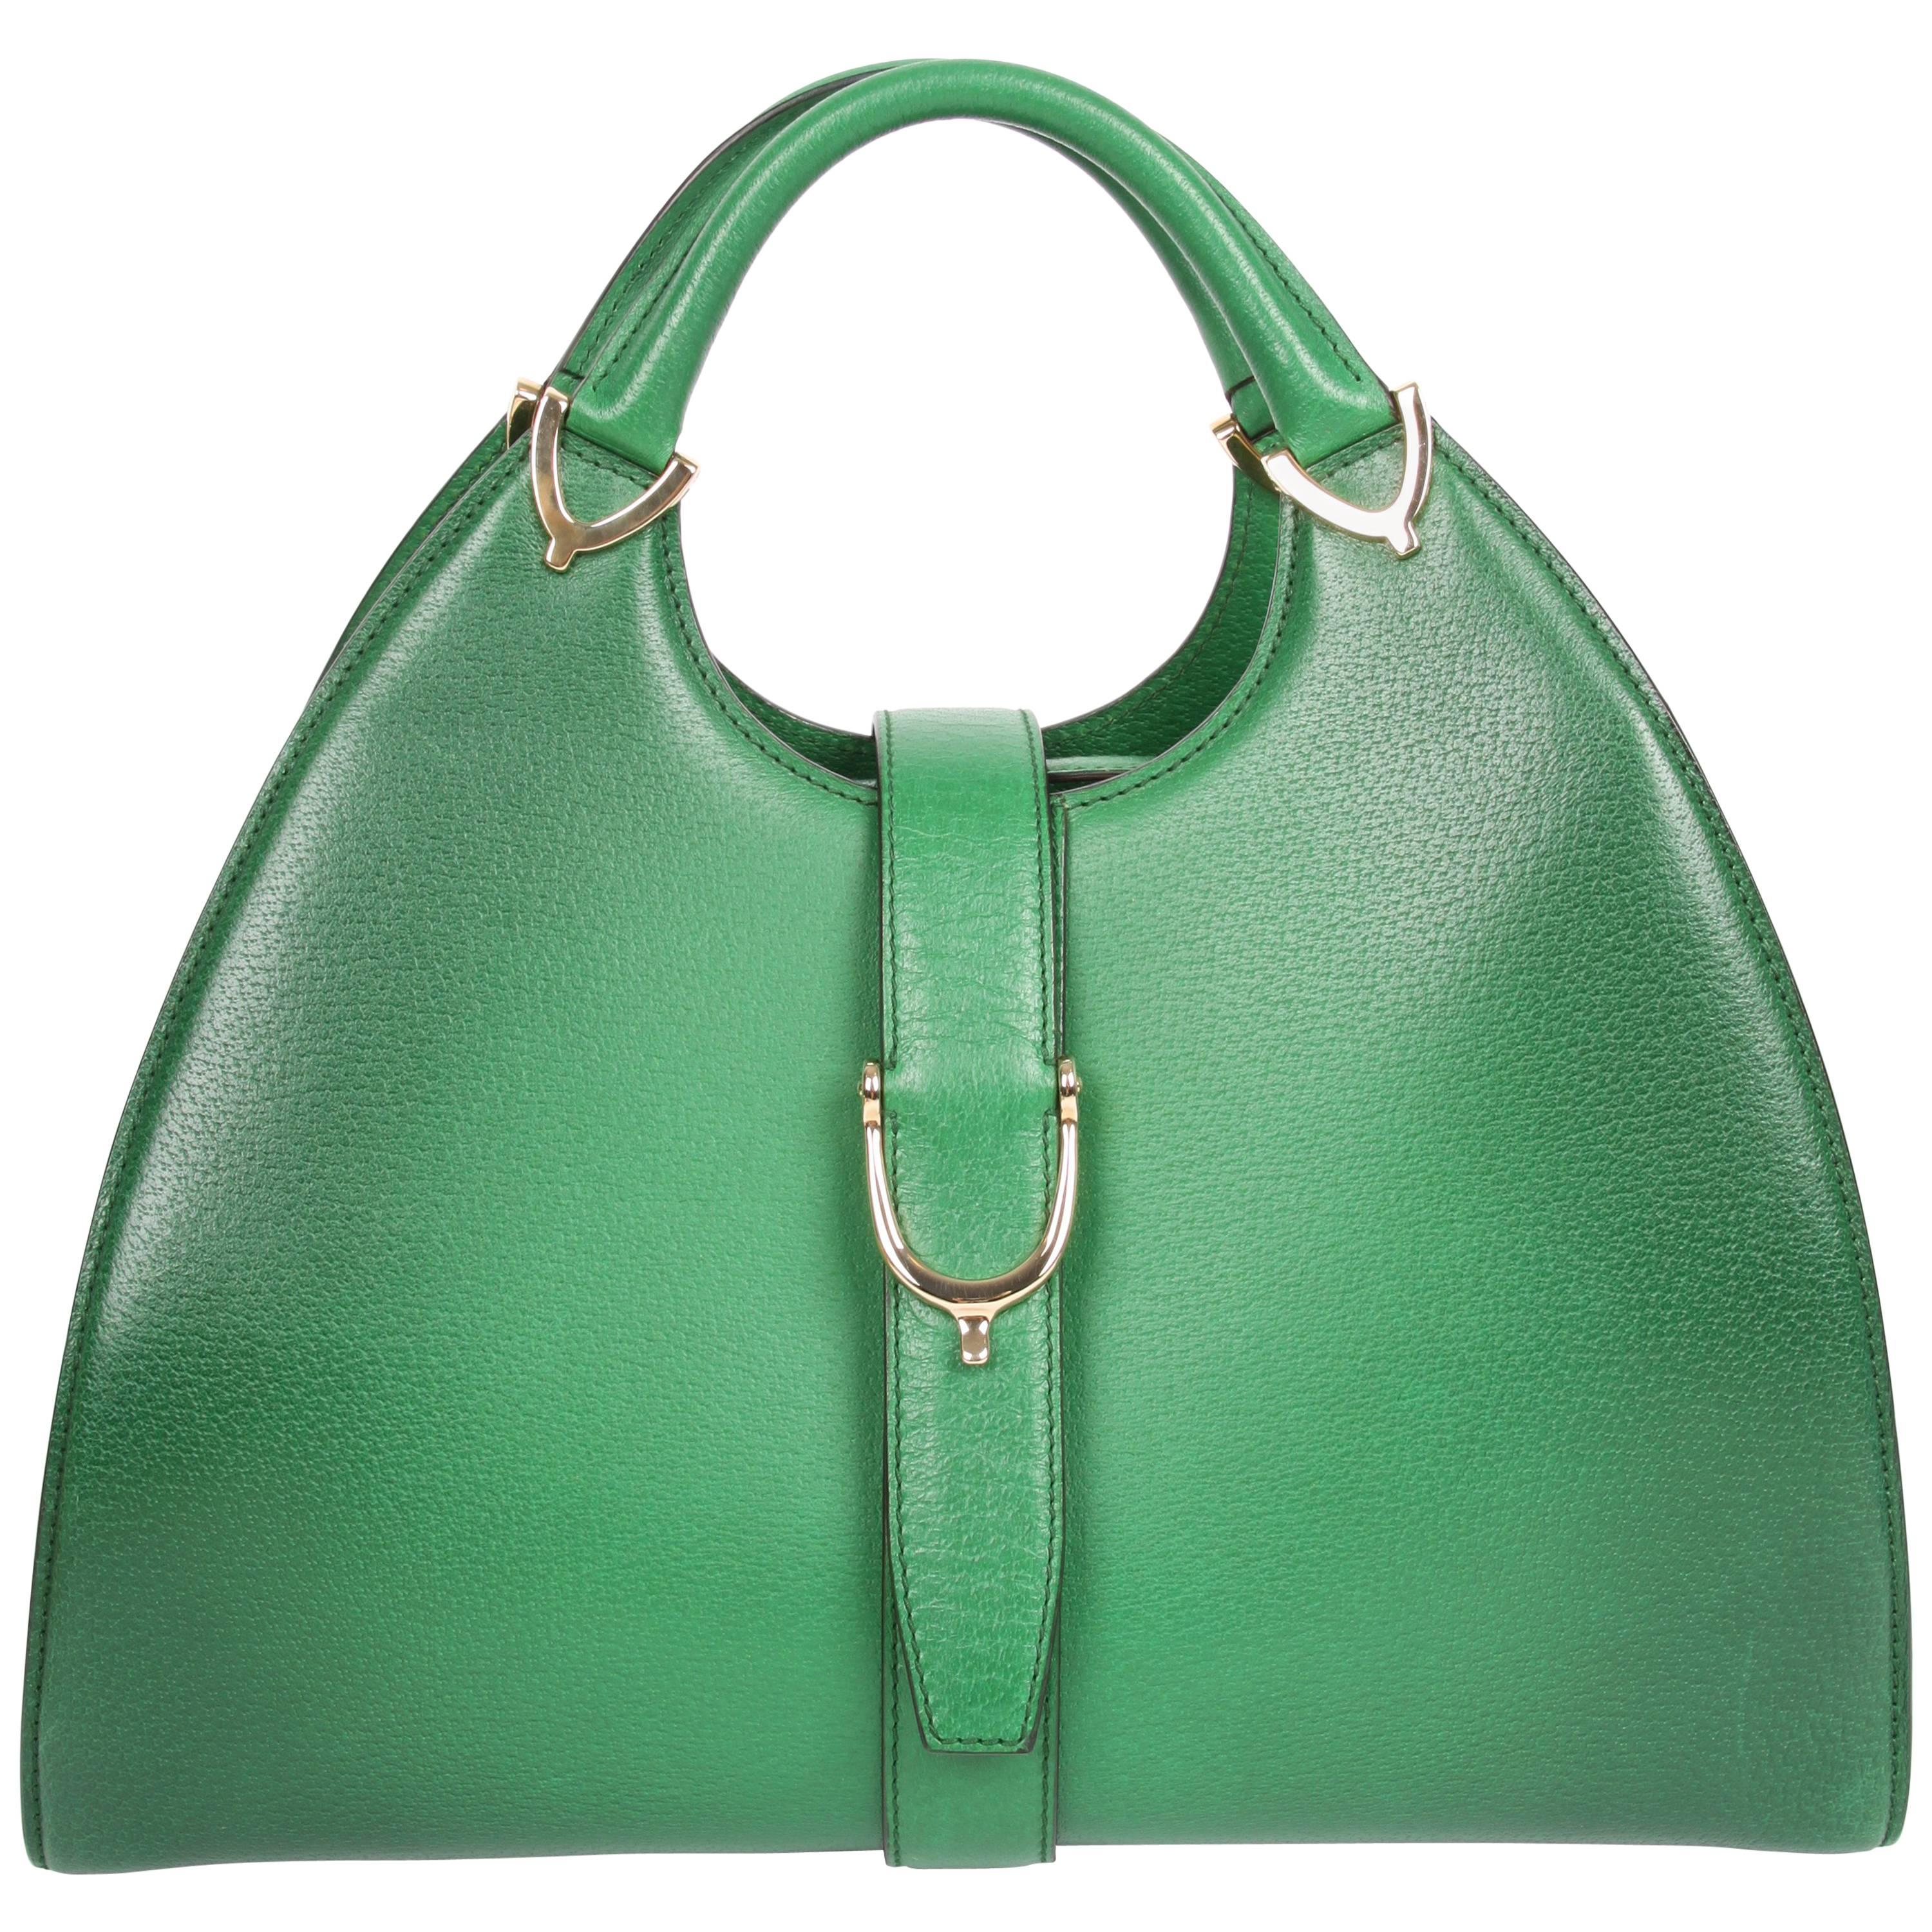   Gucci Stirrup Top Handle Bag - green   Gucci Stirrup Top Handle Bag - green   